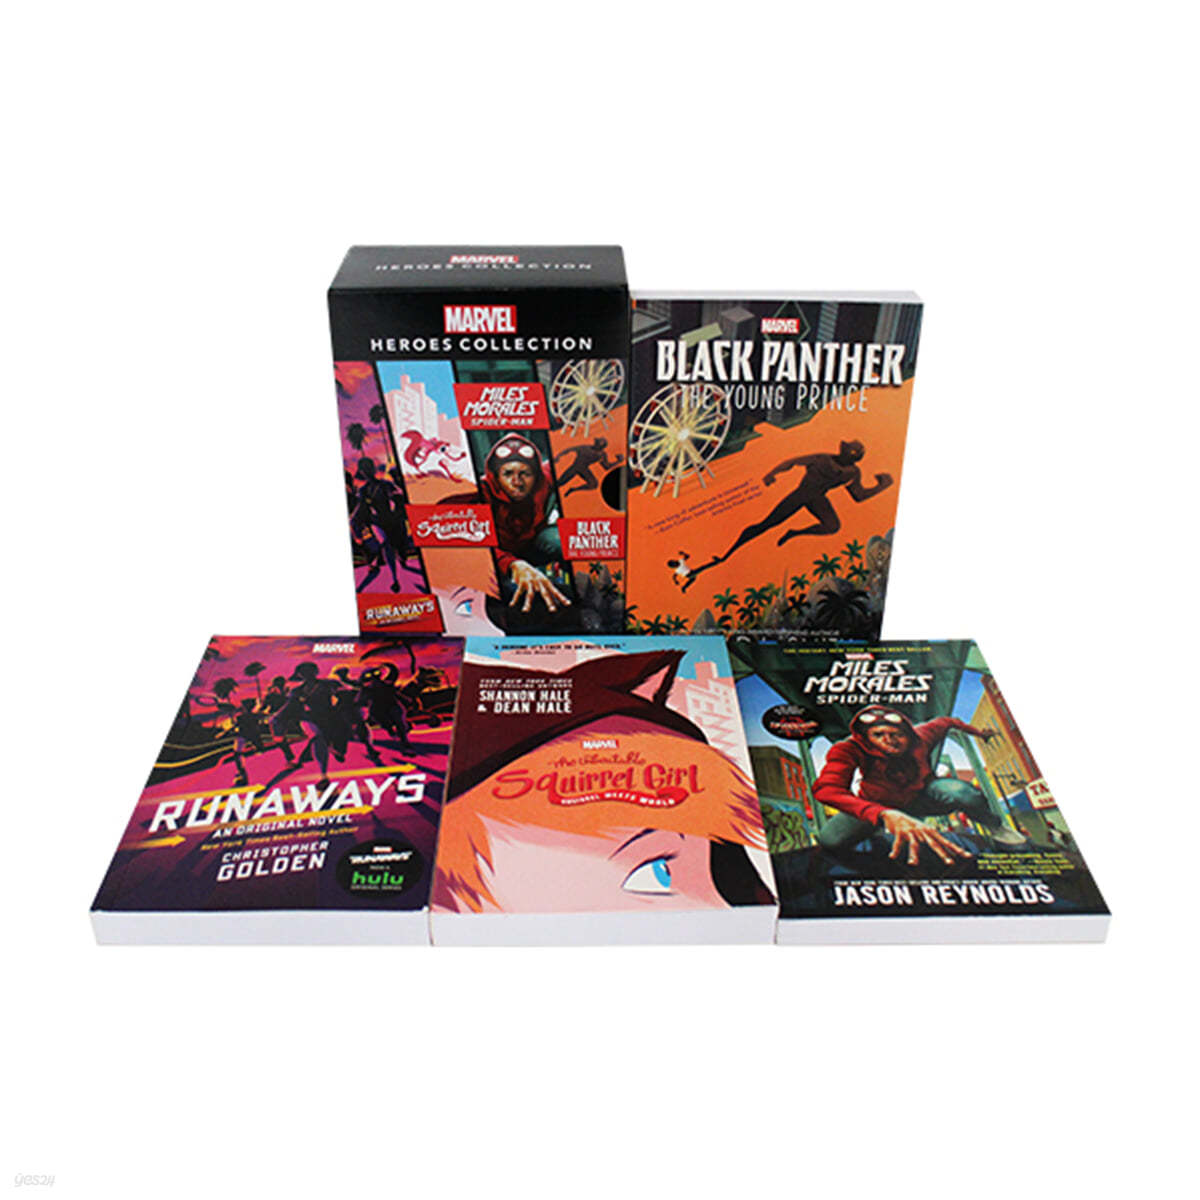 Marvel Heroes Collection (Includes 4 Original Novels)